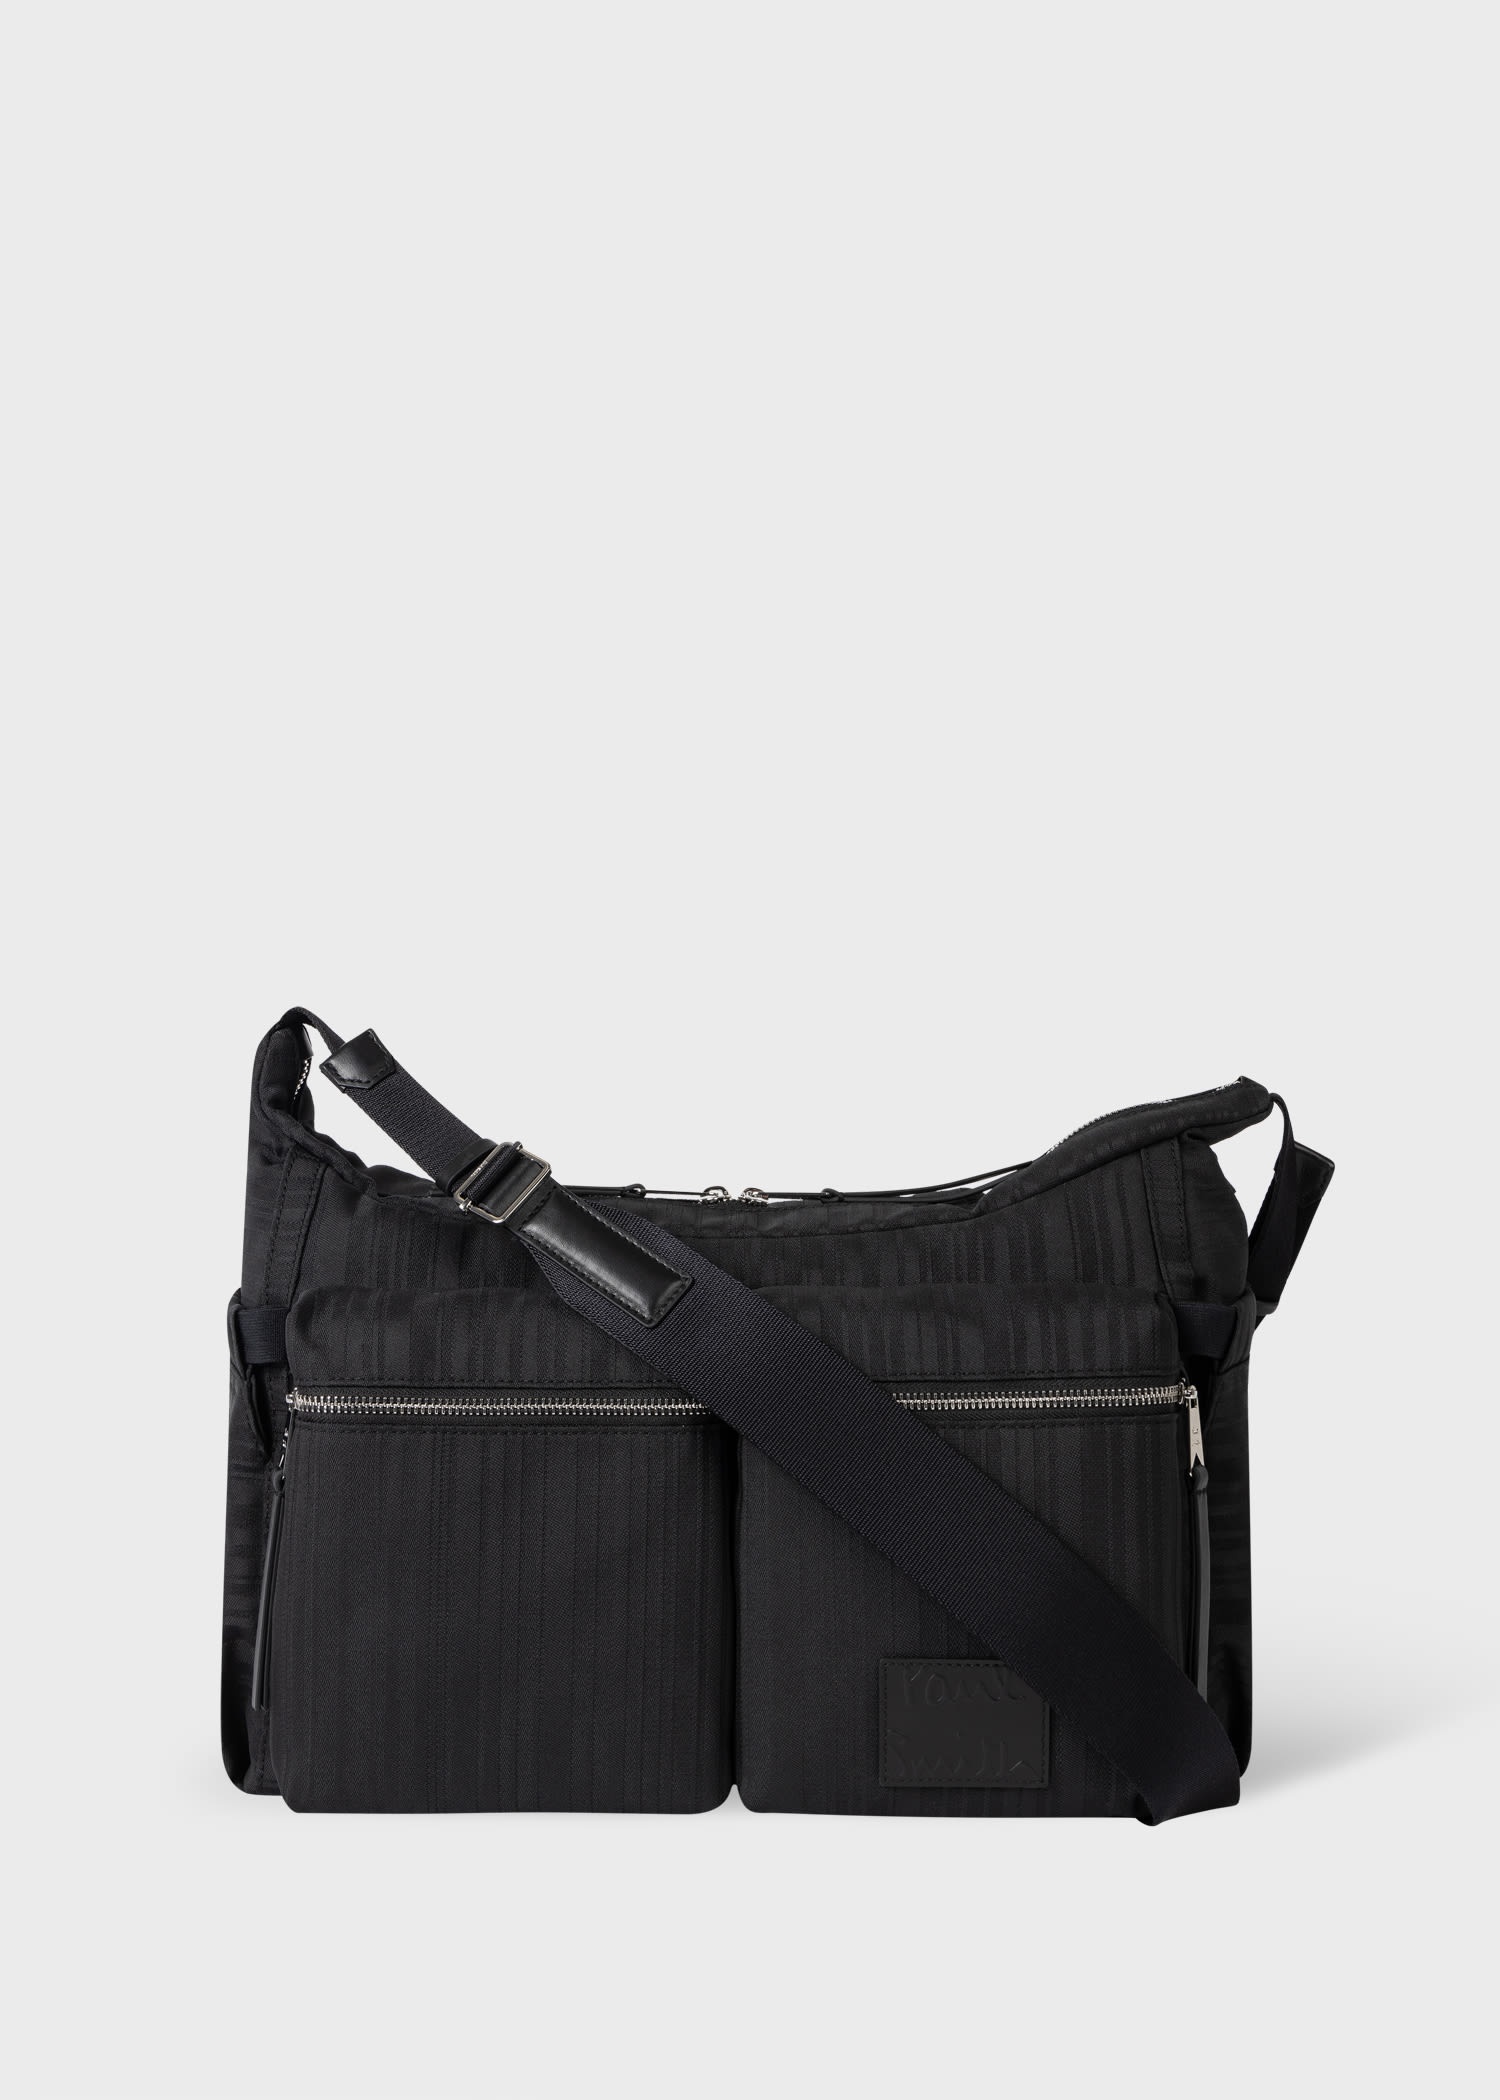 Paul Smith Men's Black Embossed Leather Sling Bag